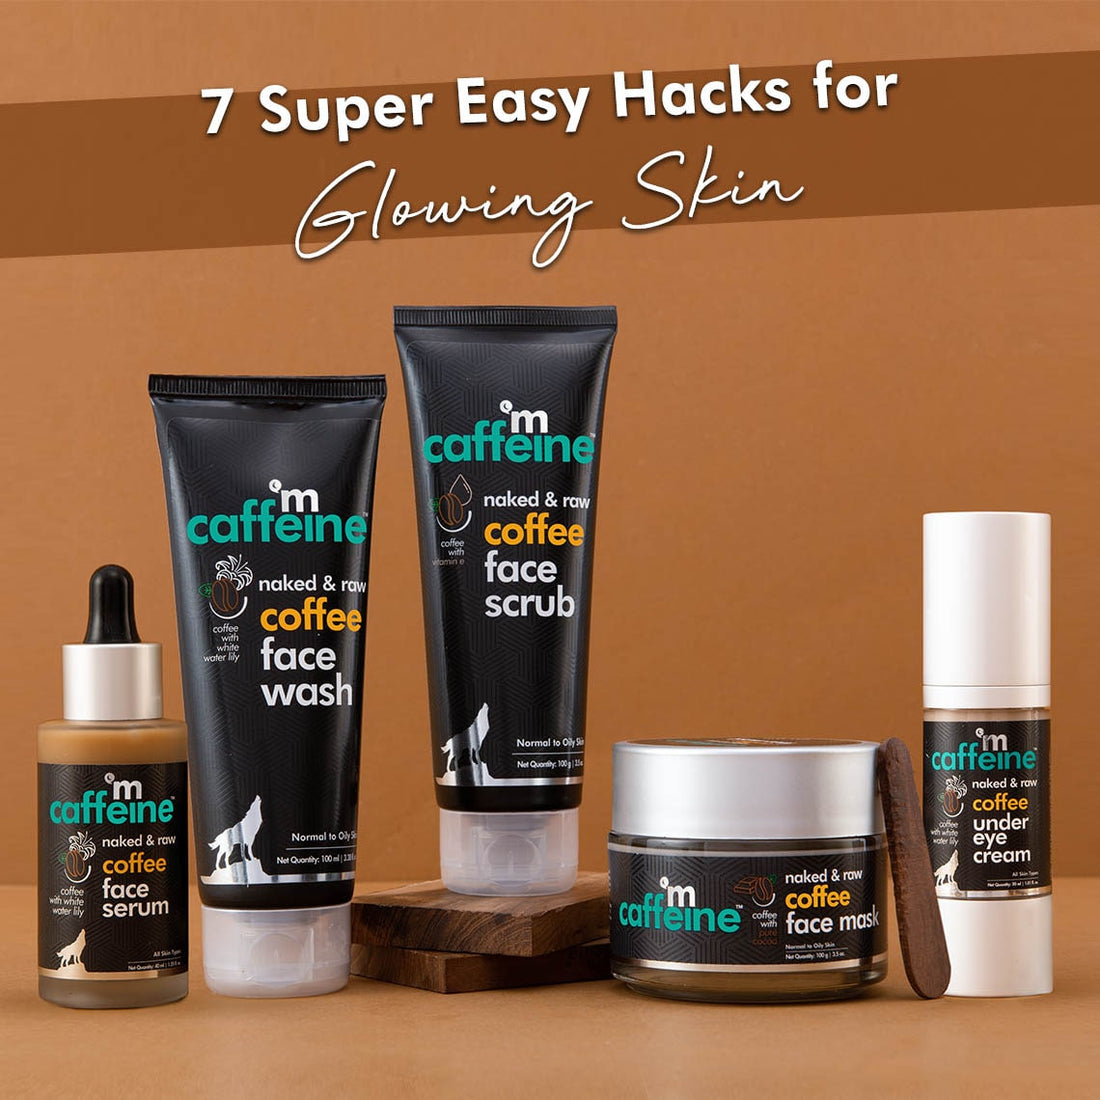 7 Super Easy Hacks for Glowing Skin